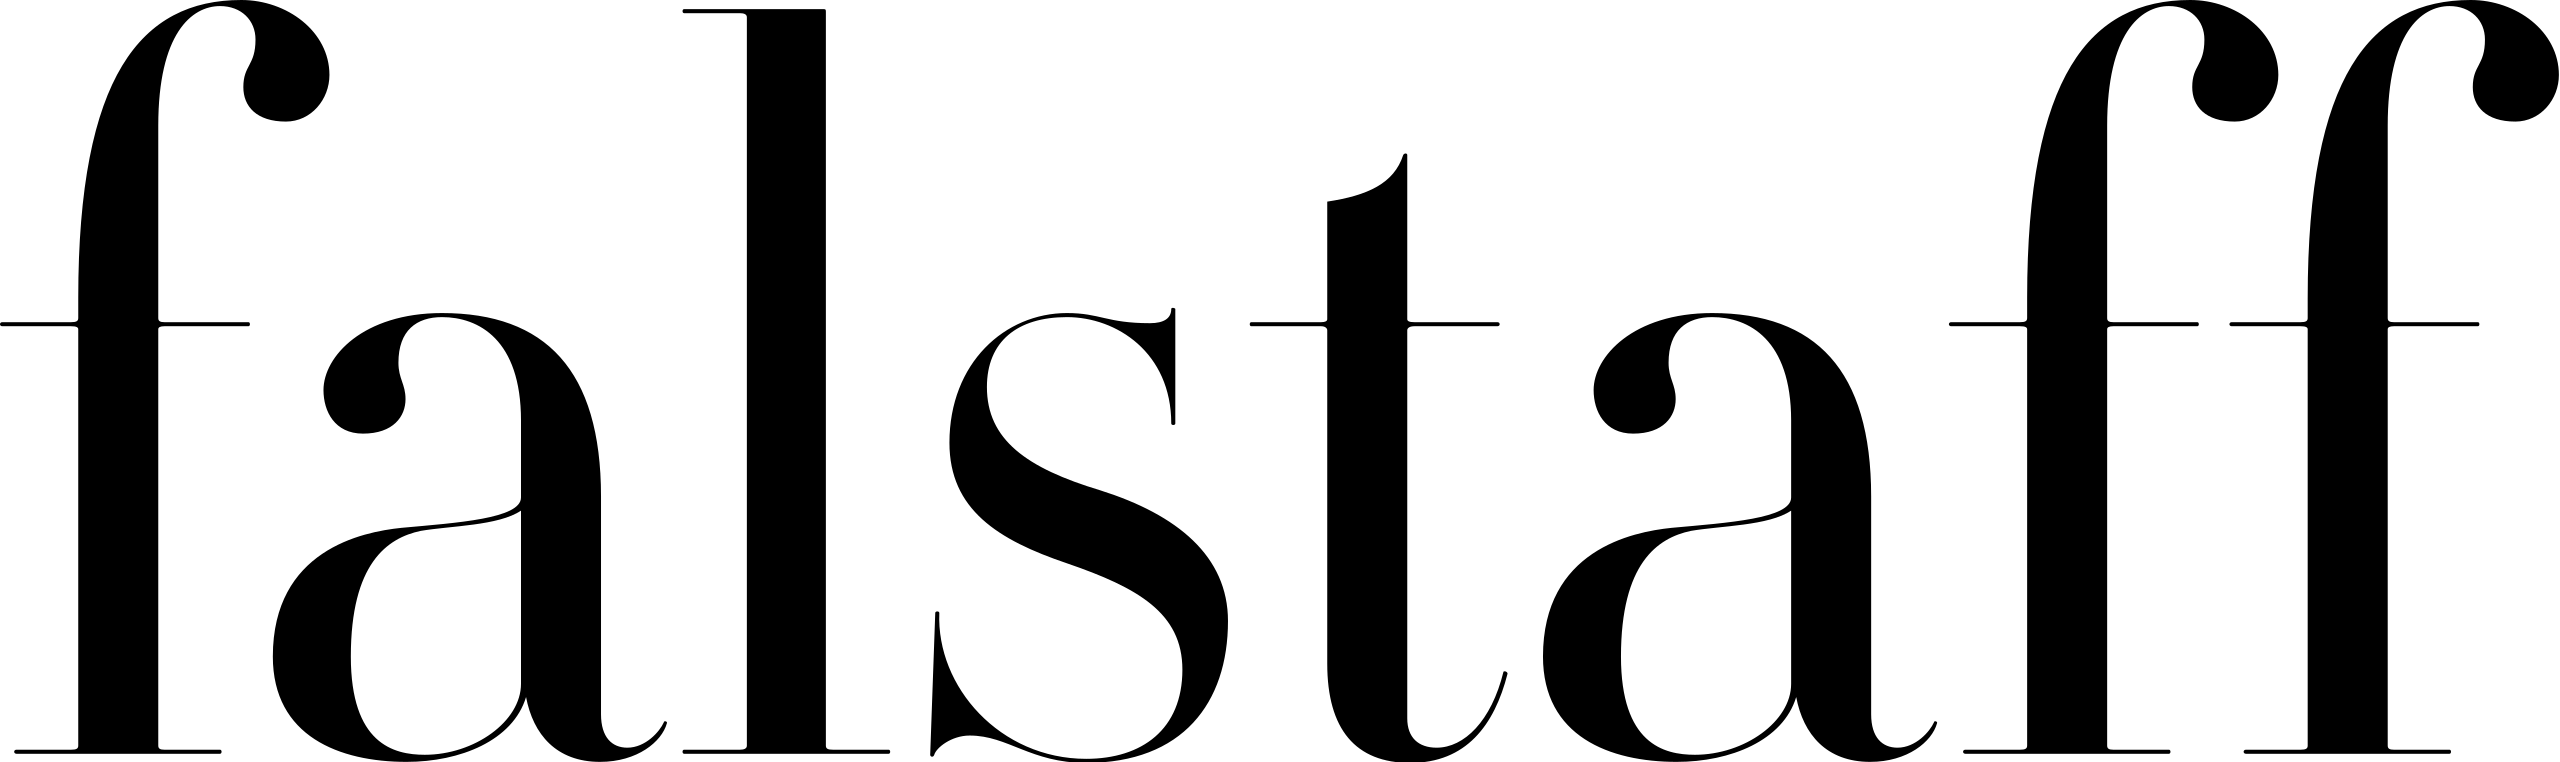 falstaff-logo.png (41 KB)